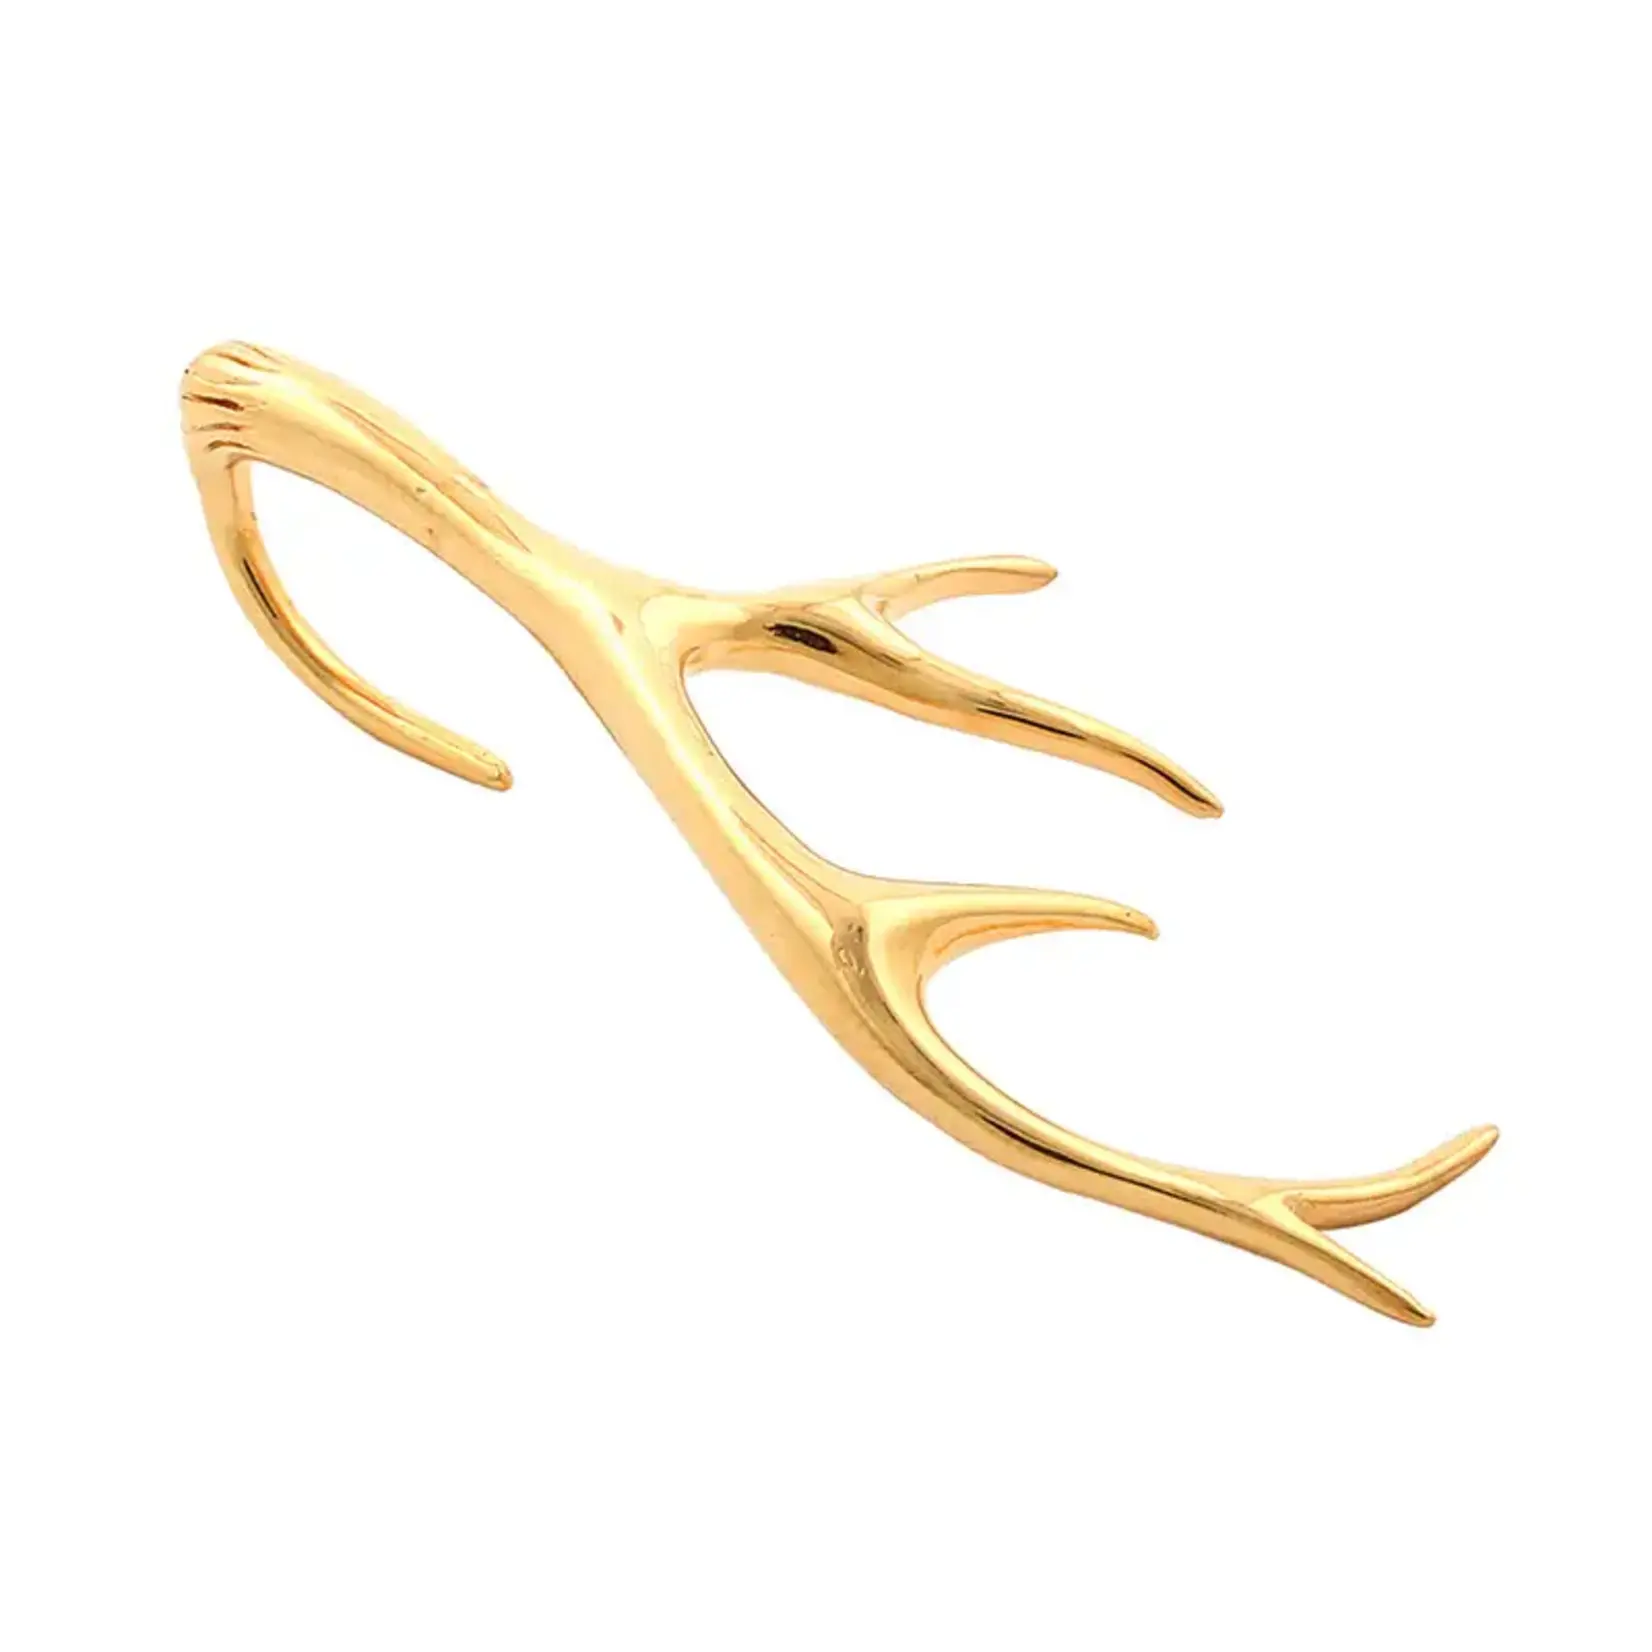 Tawapa Tawapa yellow gold plated "Antlers" hanging design